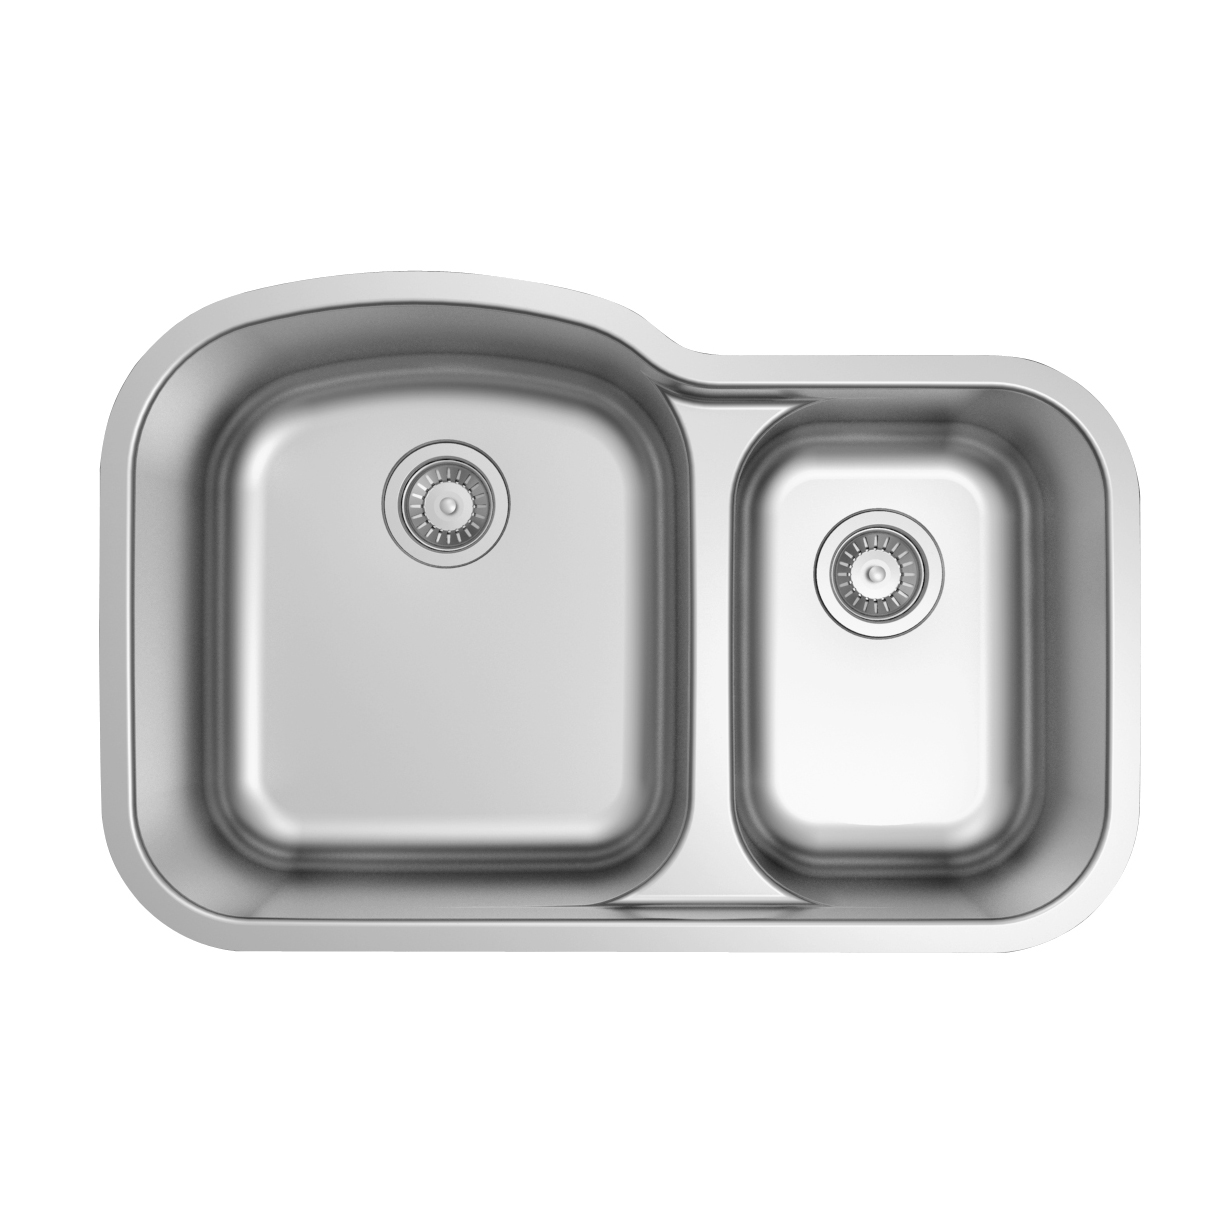 Stainless Steel Double Bowl Undermount Drawn Kitchen Sink